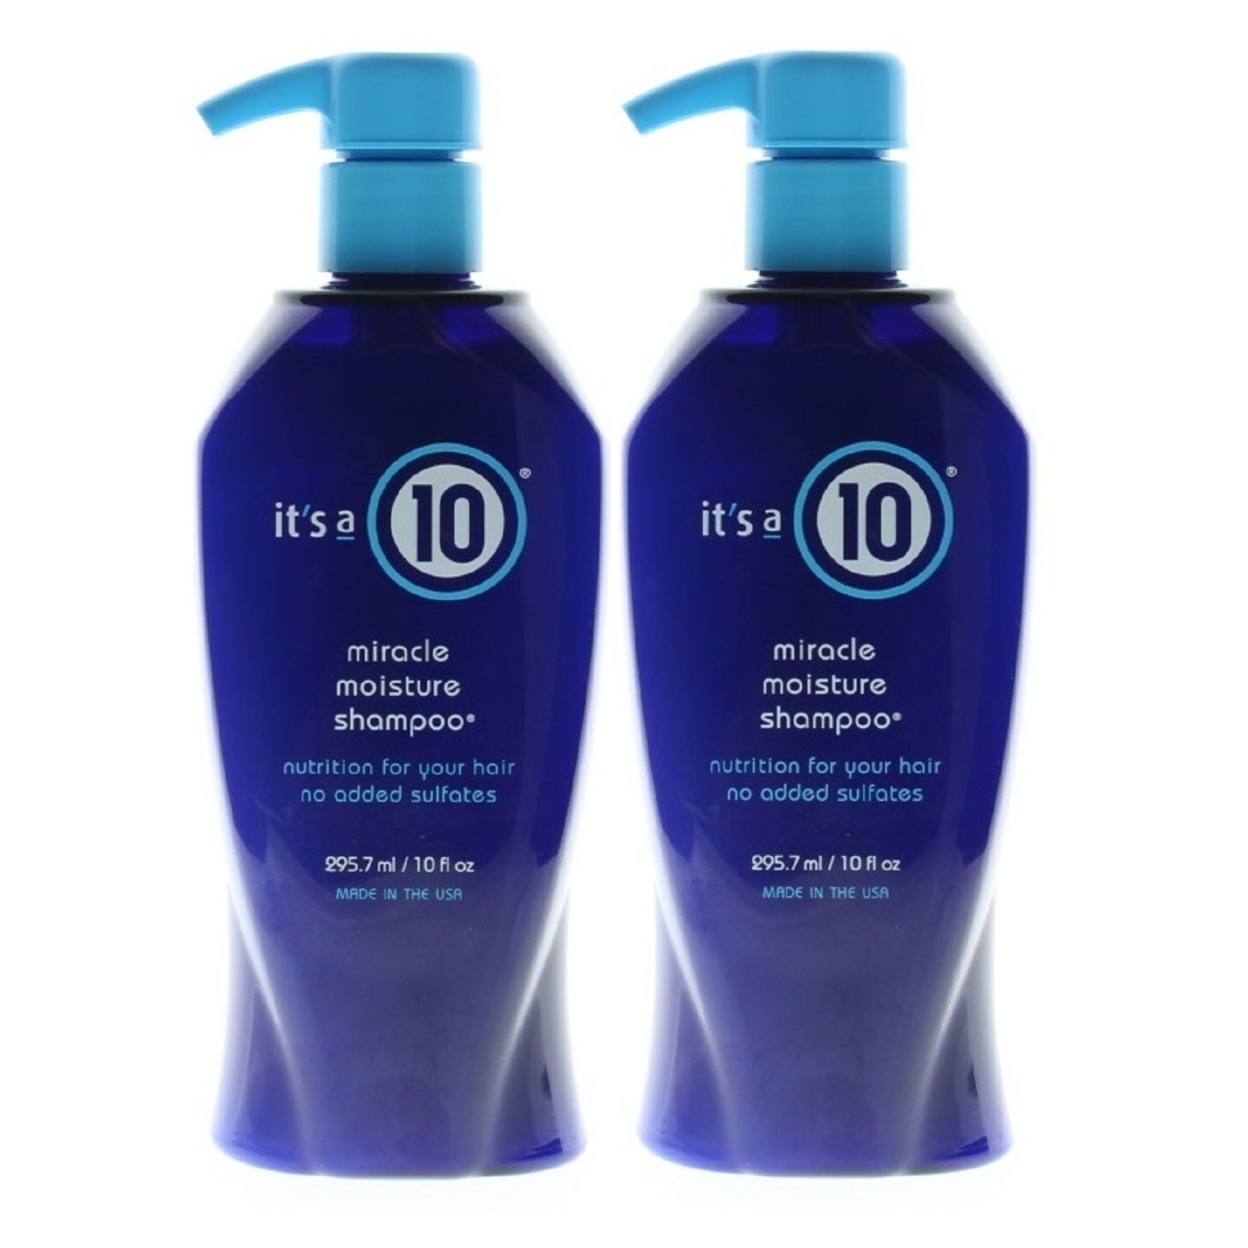 It's A 10 Miracle Moisture Shampoo 10oz/295.7ml (2 Pack)